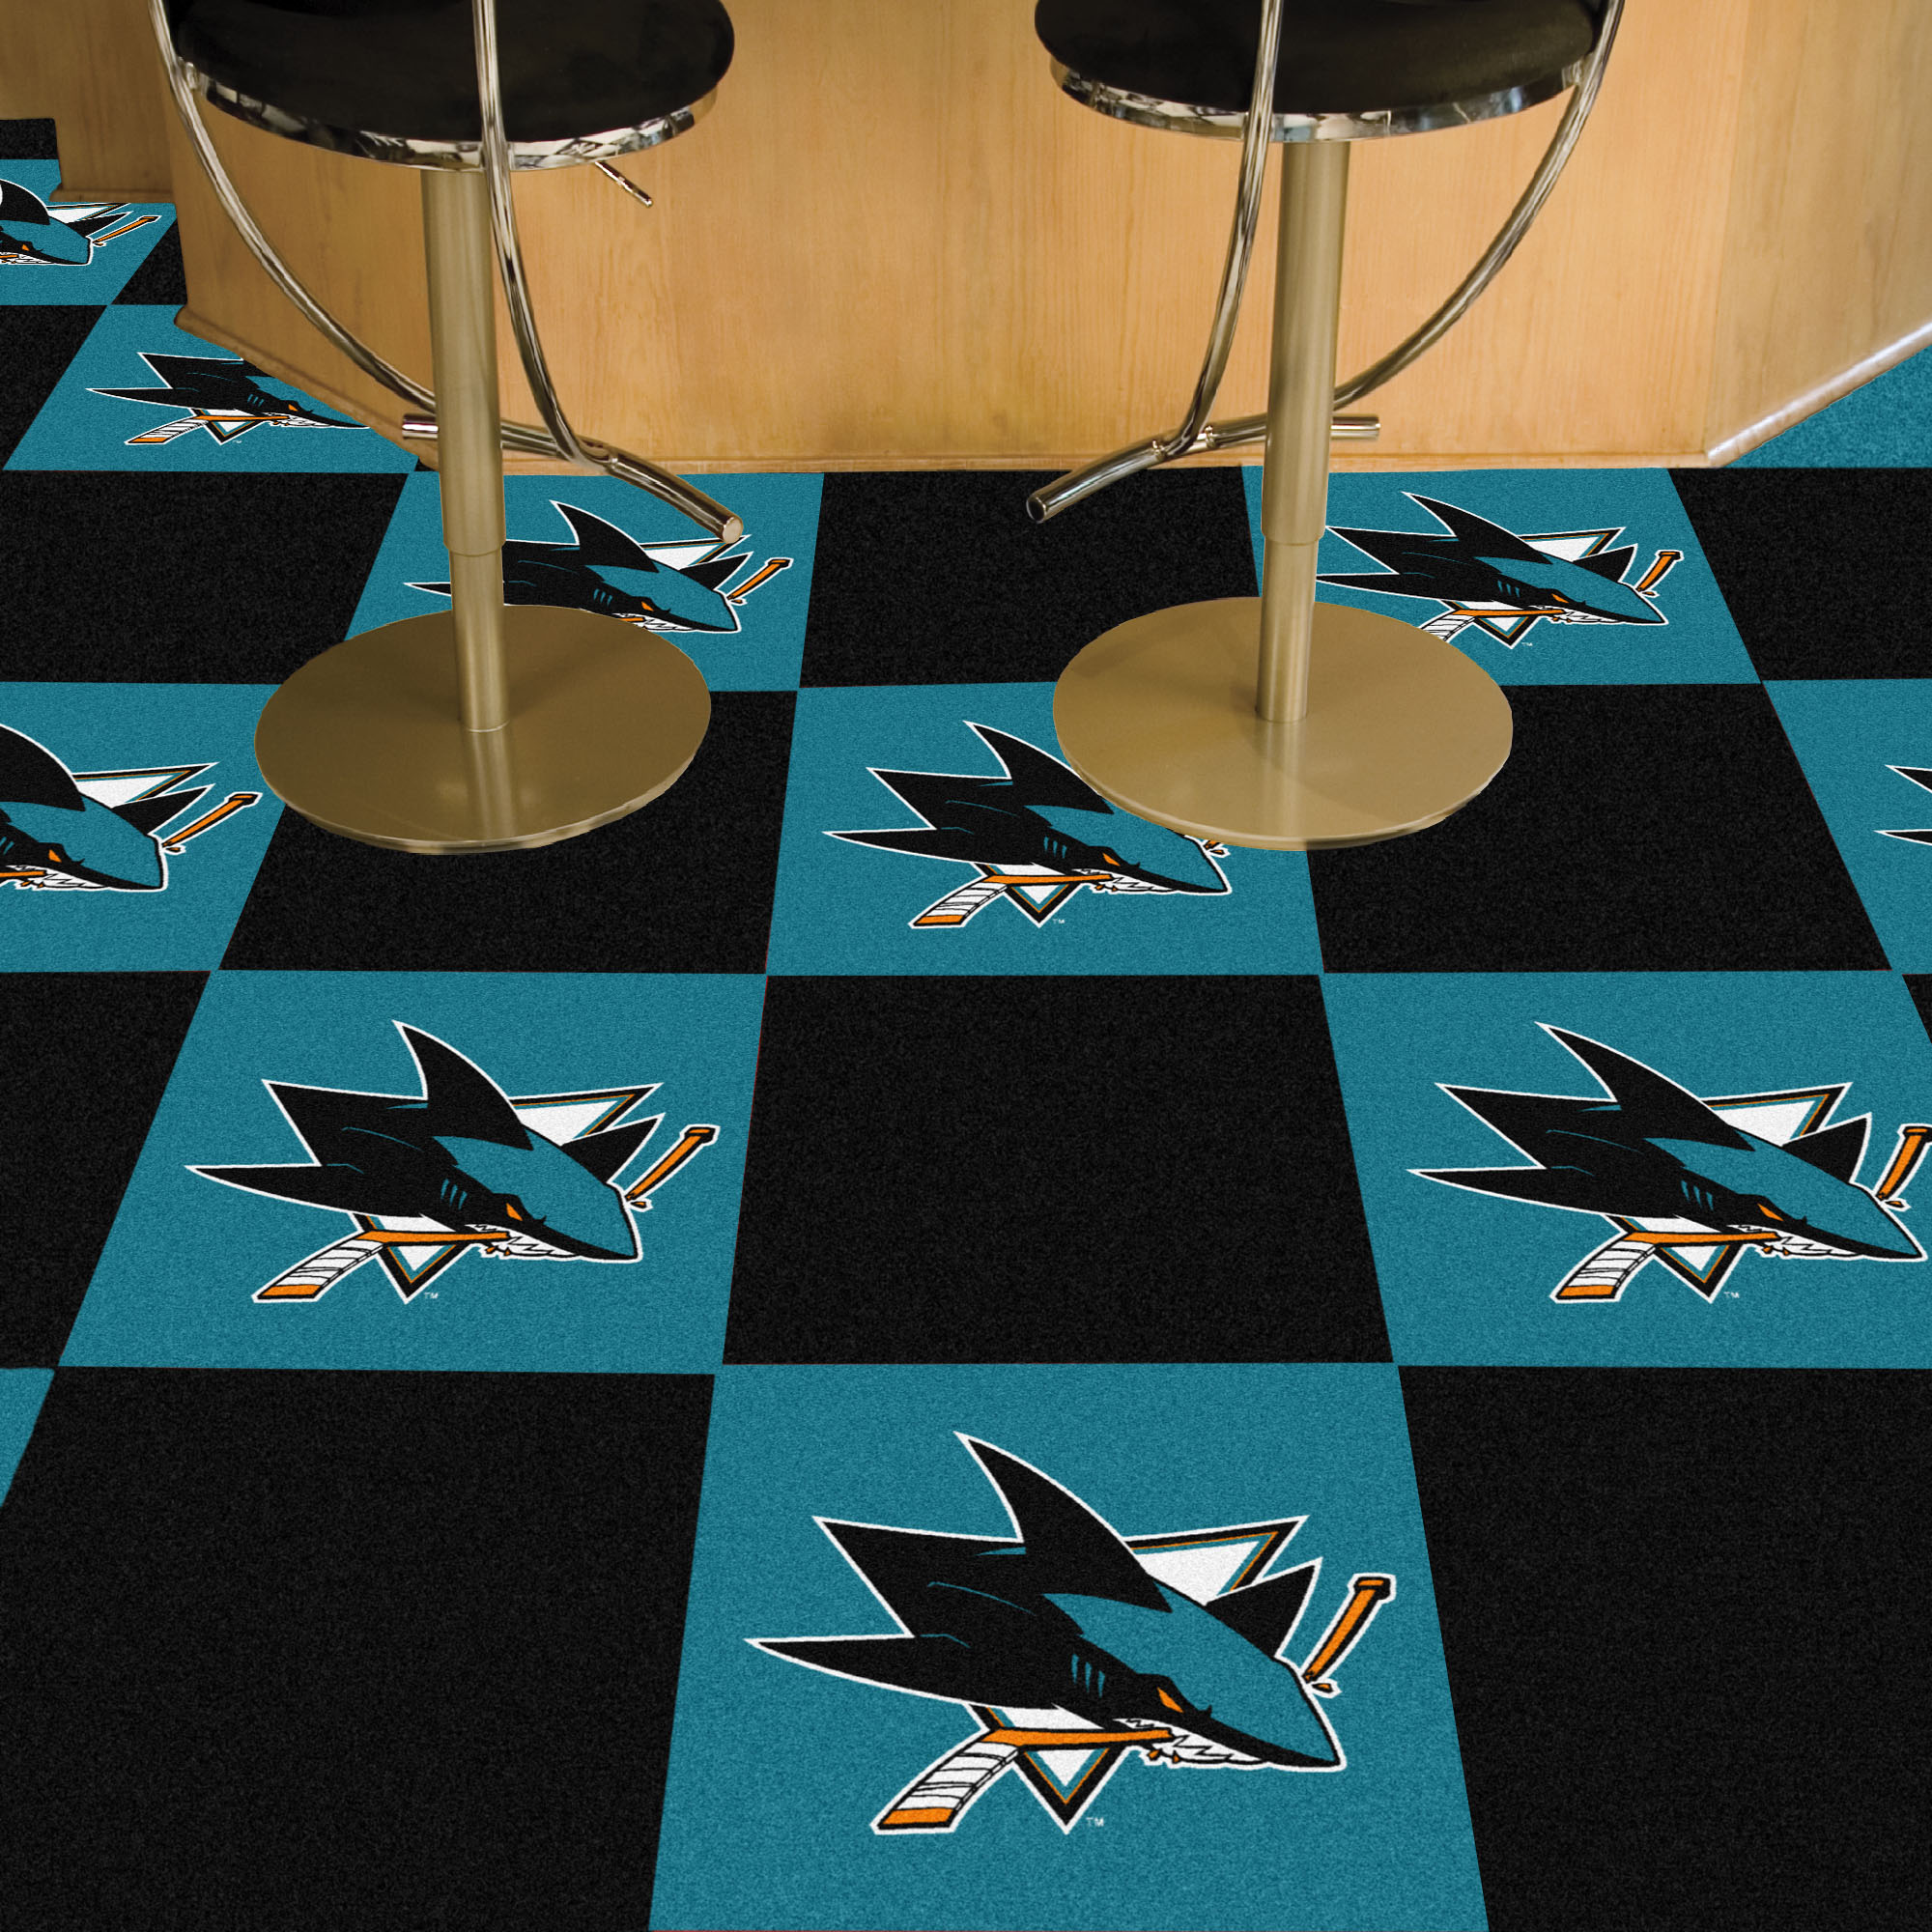 San Jose Sharks Team Carpet Tiles - 45 sq ft